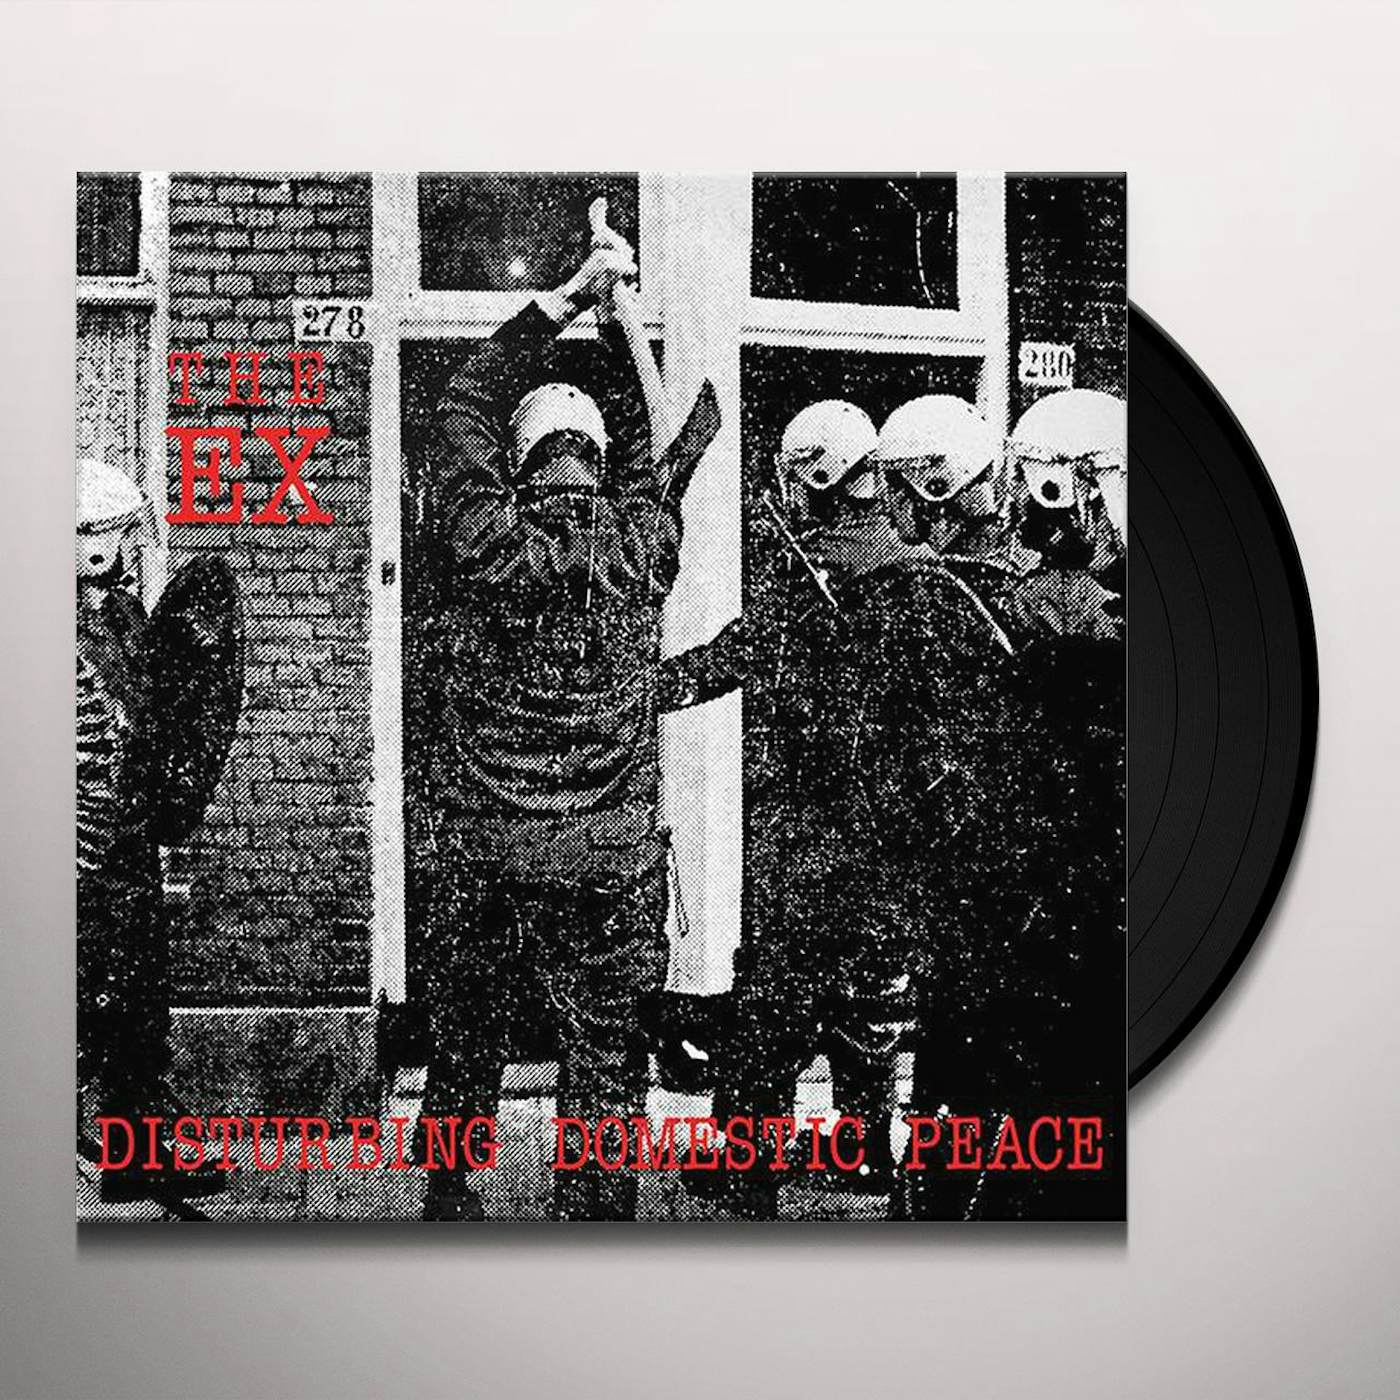 Ex Disturbing Domestic Peace Vinyl Record